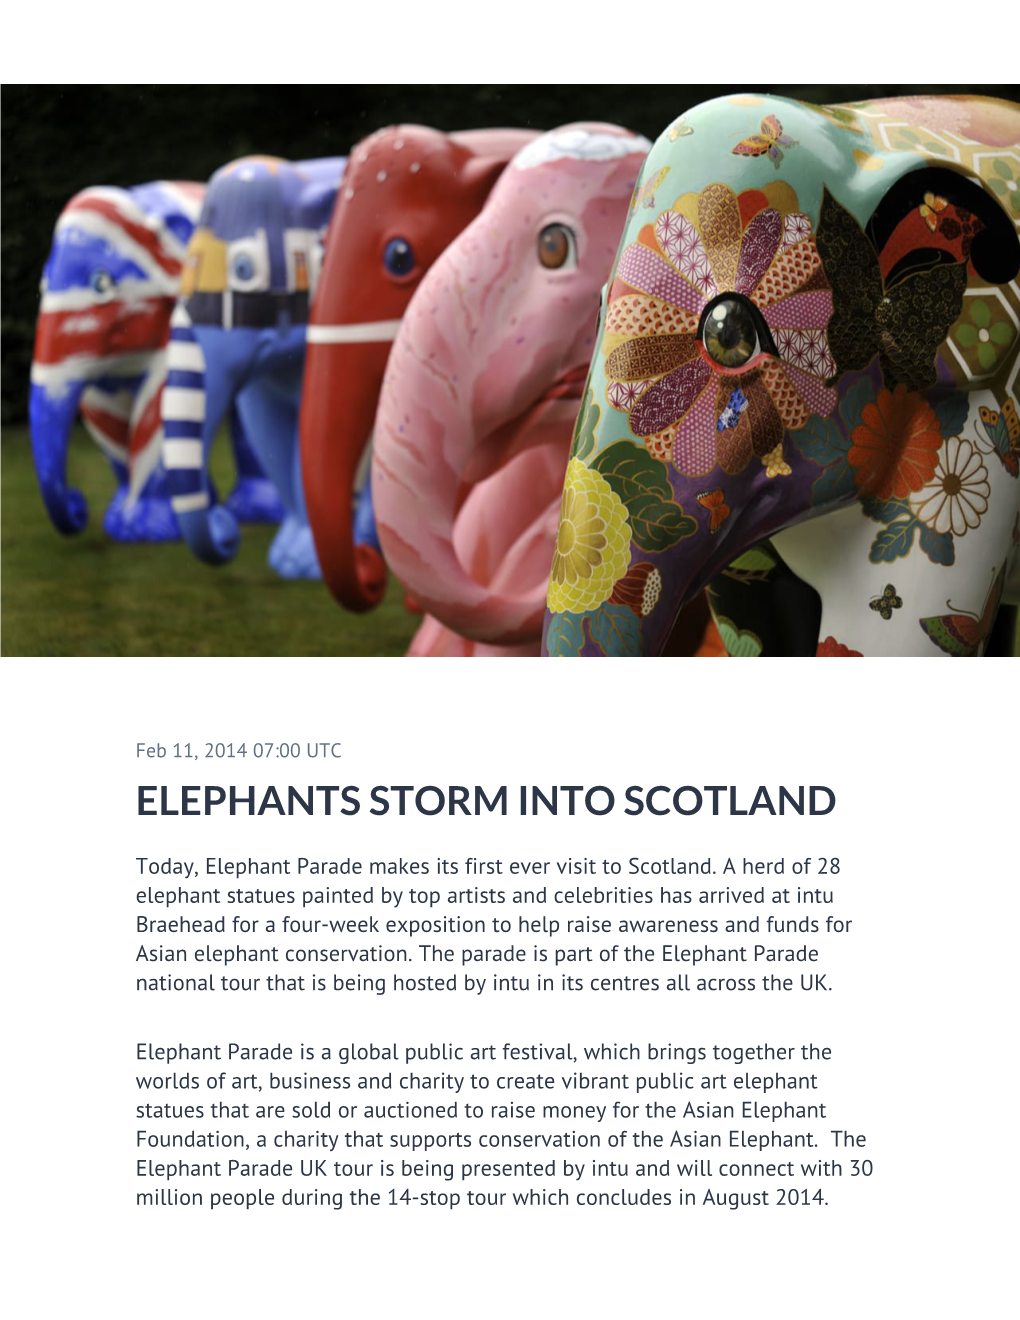 Elephants Storm Into Scotland